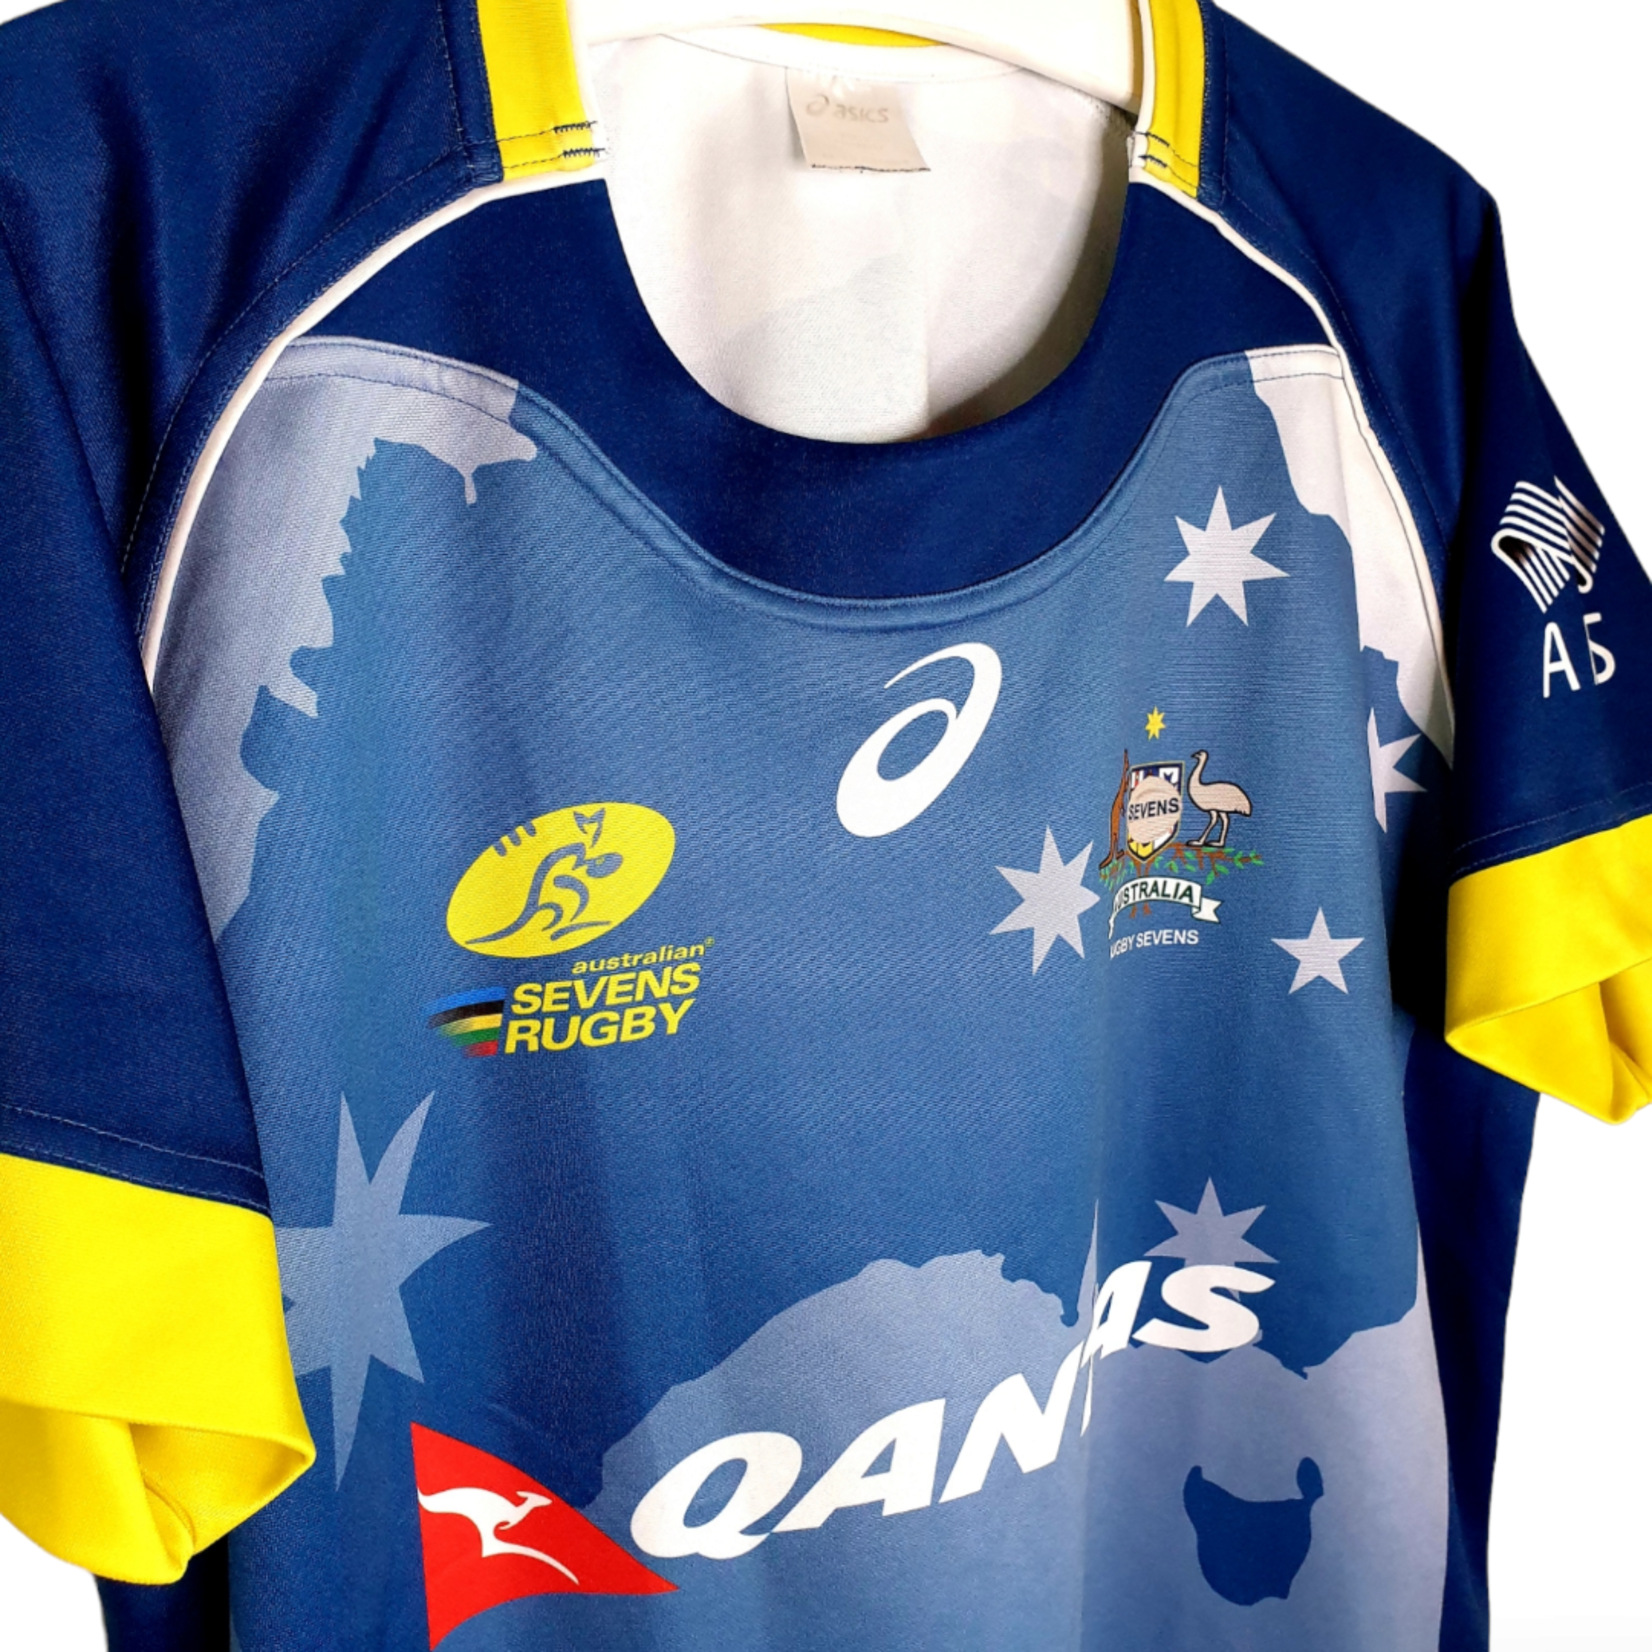 Asics Original Asics vintage rugby jersey Australia Sevens 2016